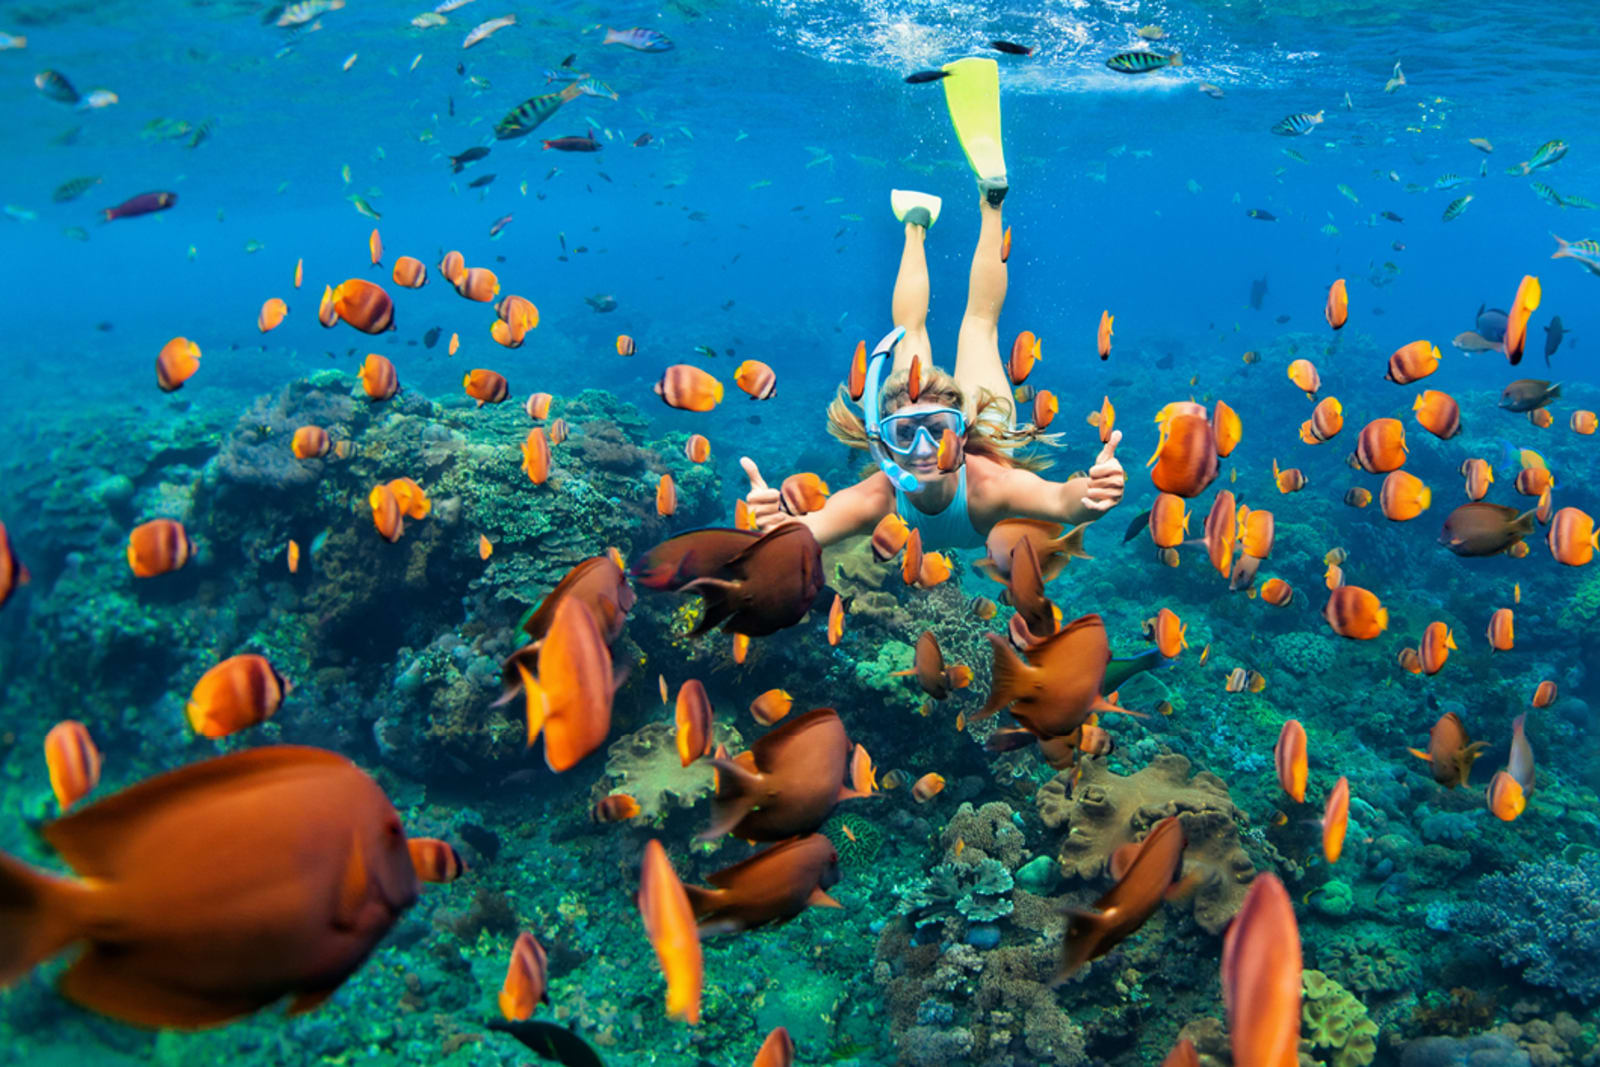 A woman snorkelling in a school of tropical orange fish in Bali